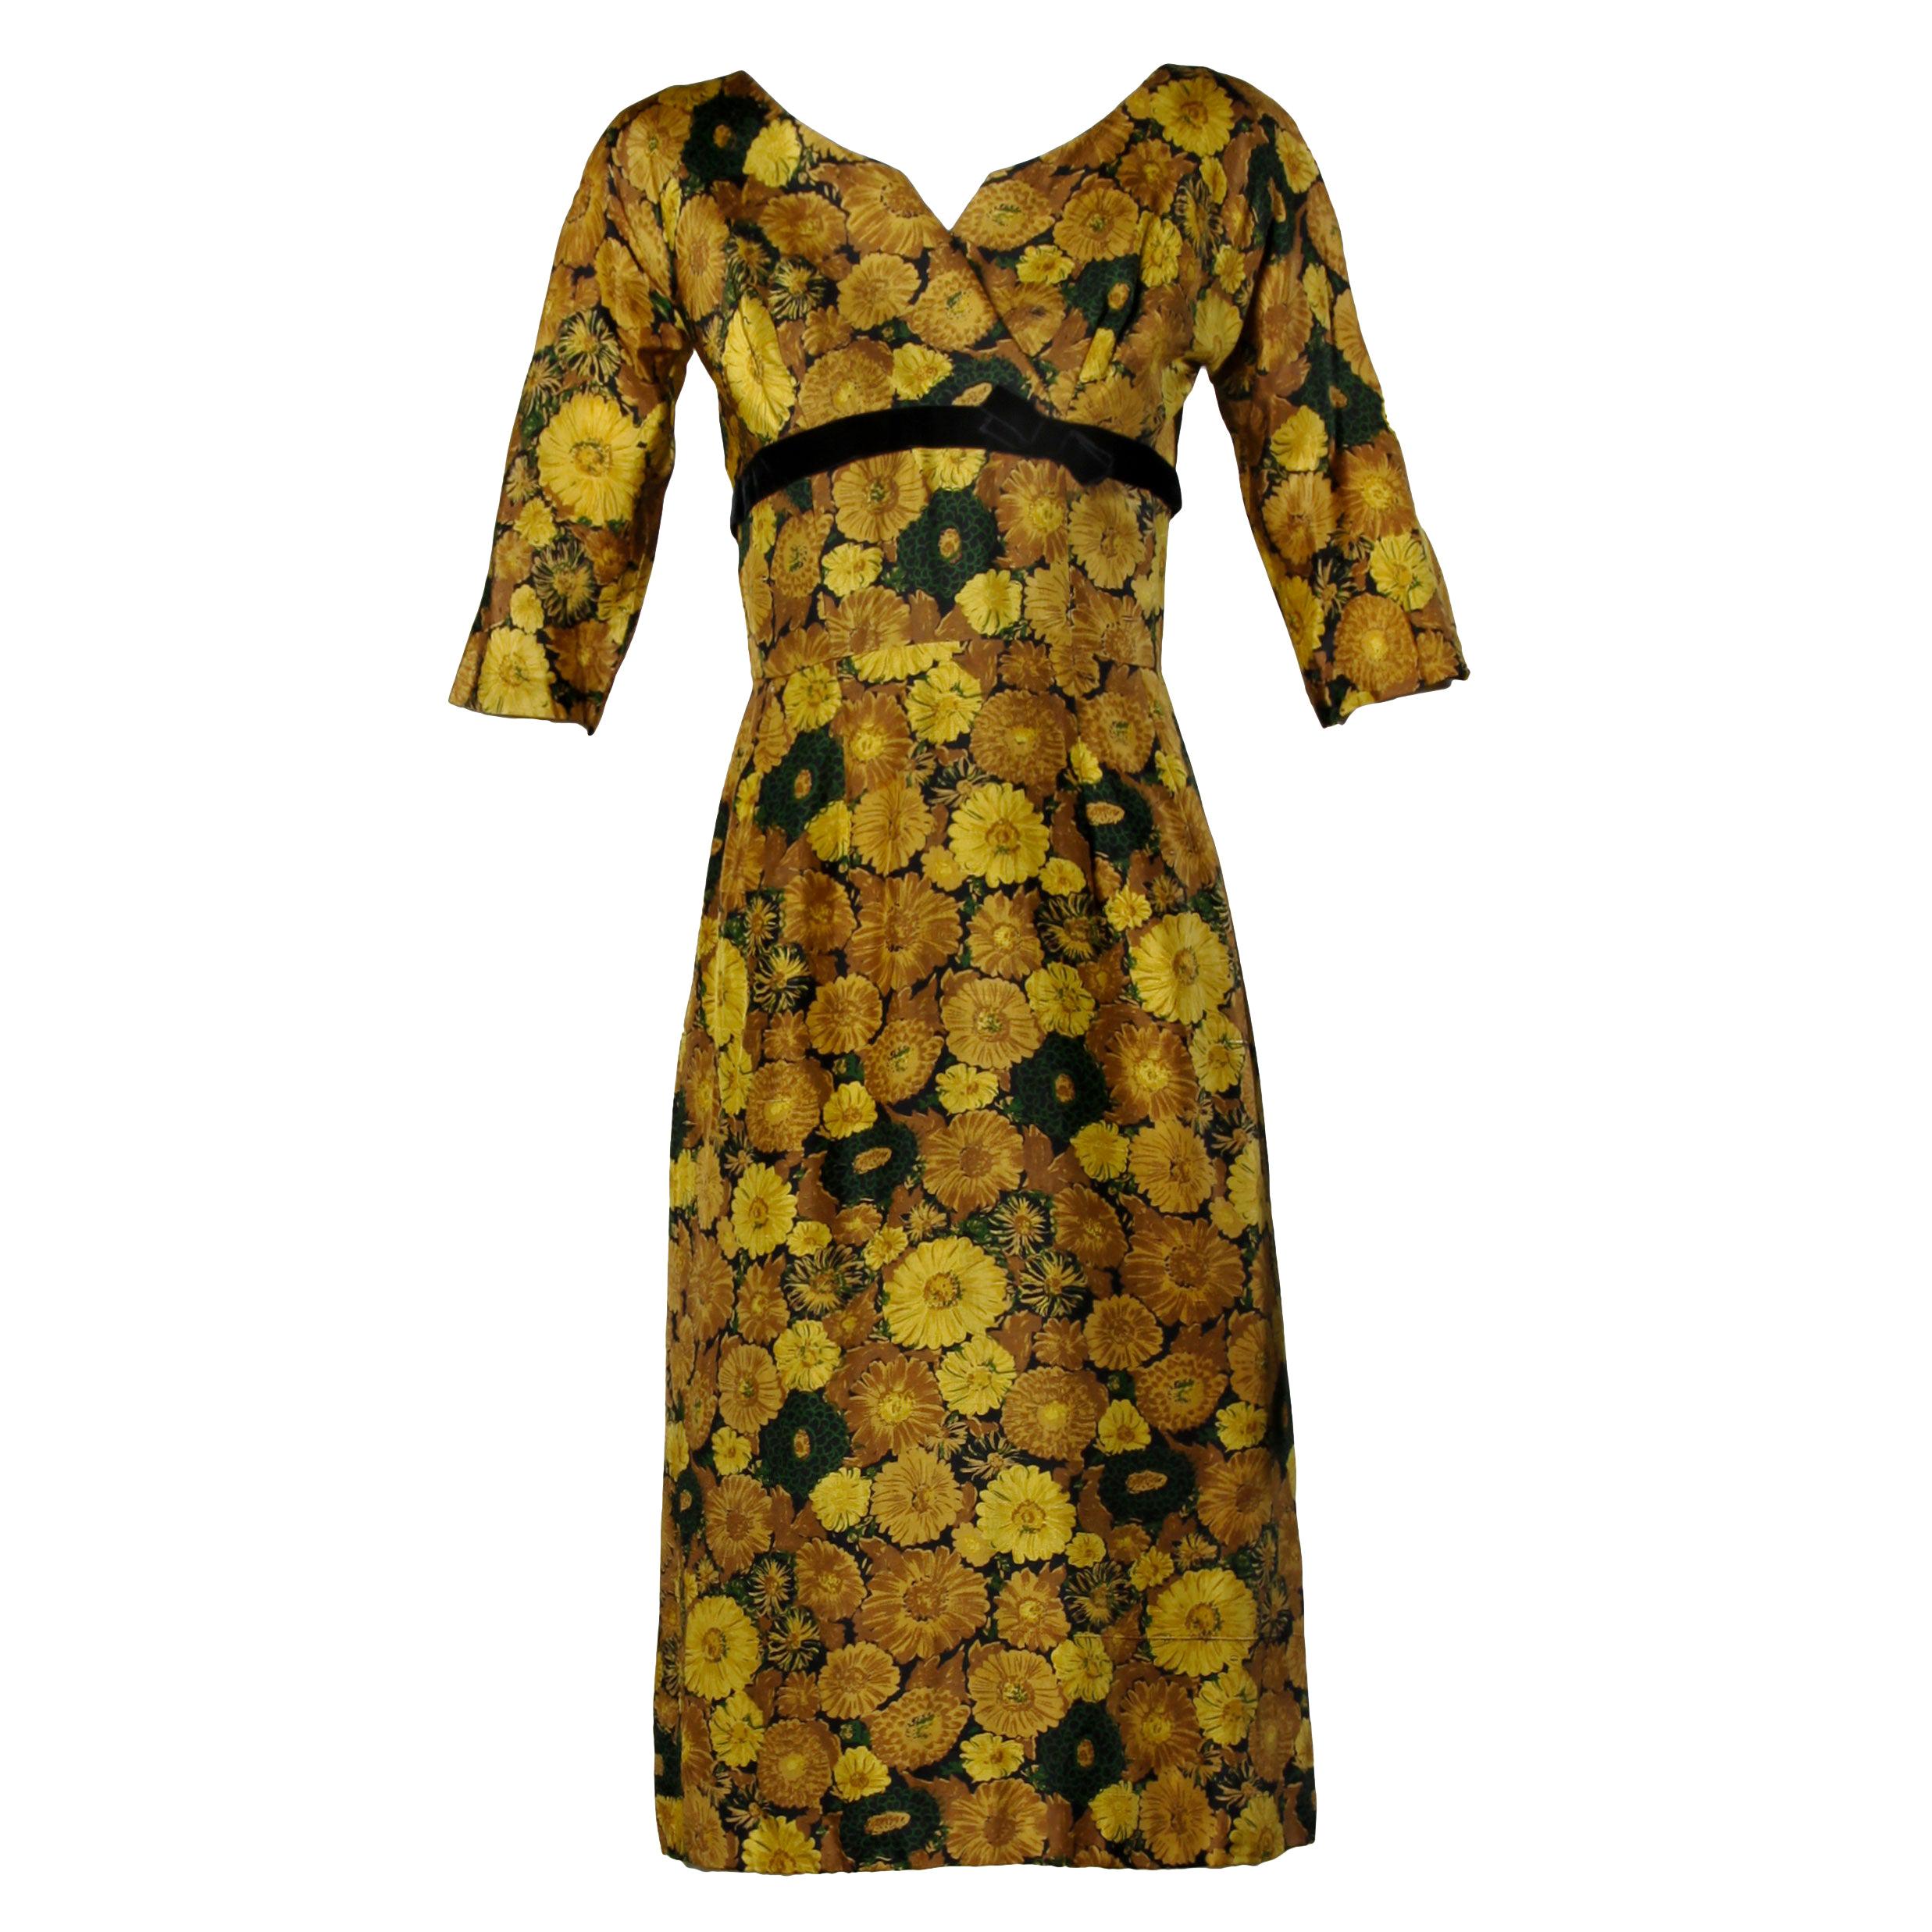 Vintage Silk Yellow Floral Print Cocktail Dress, 1950s-1960s